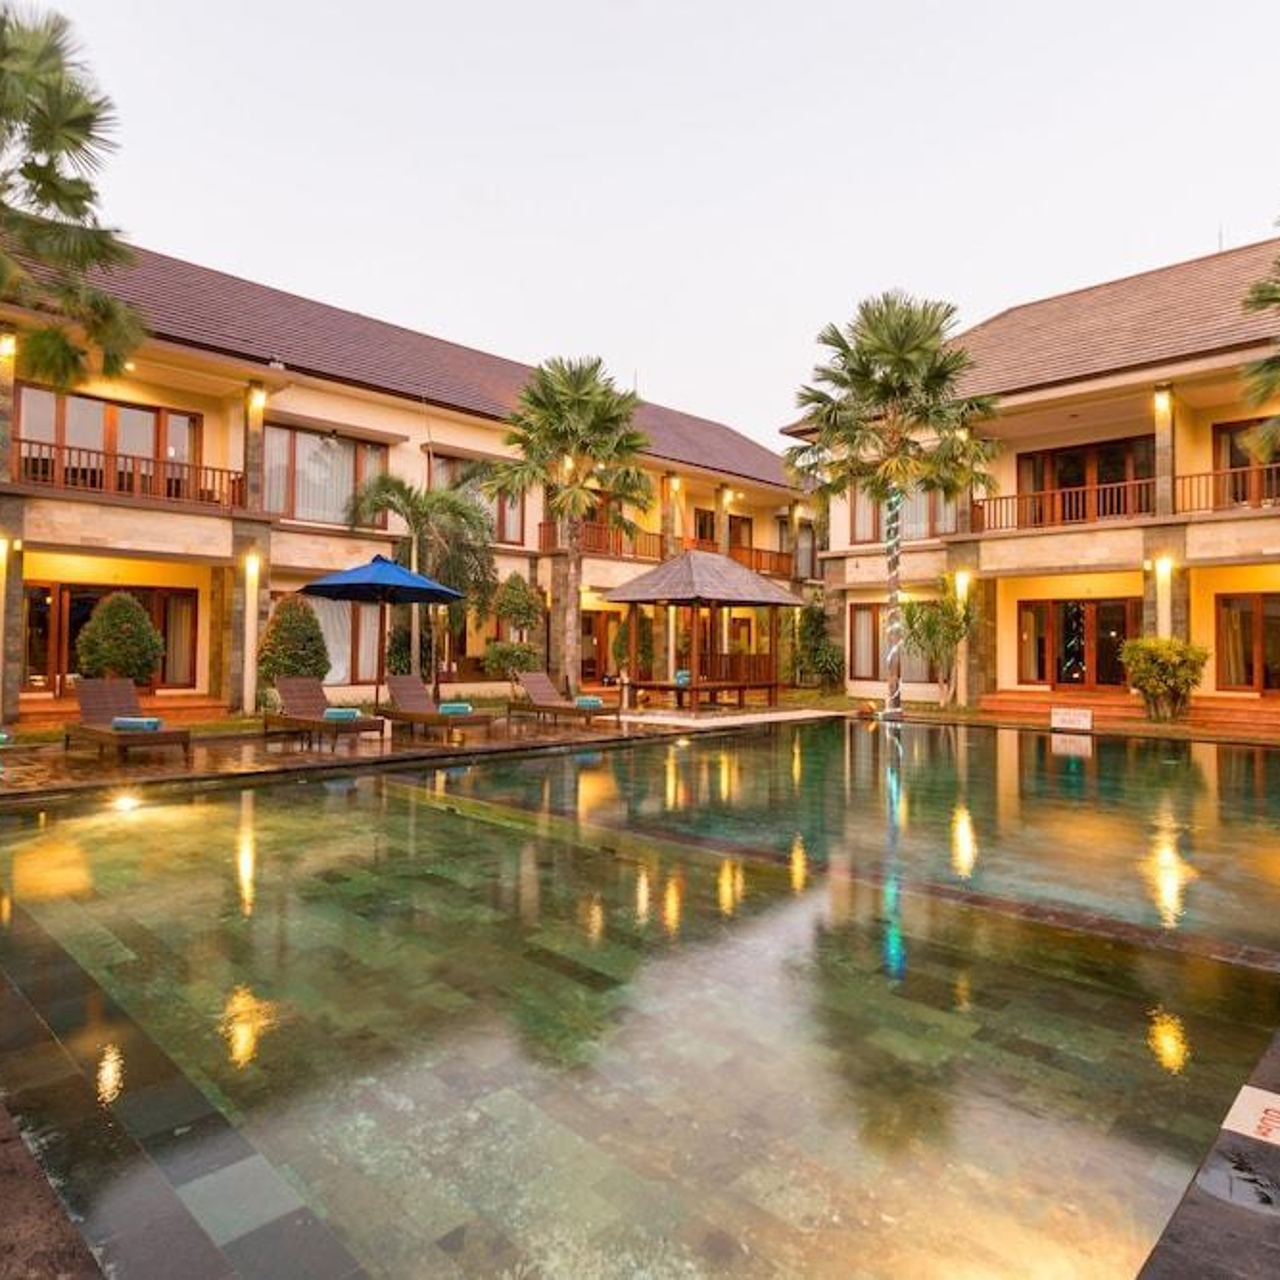 Vidi Boutique Hotel Bali - Jimbaran chez HRS avec services gratuits